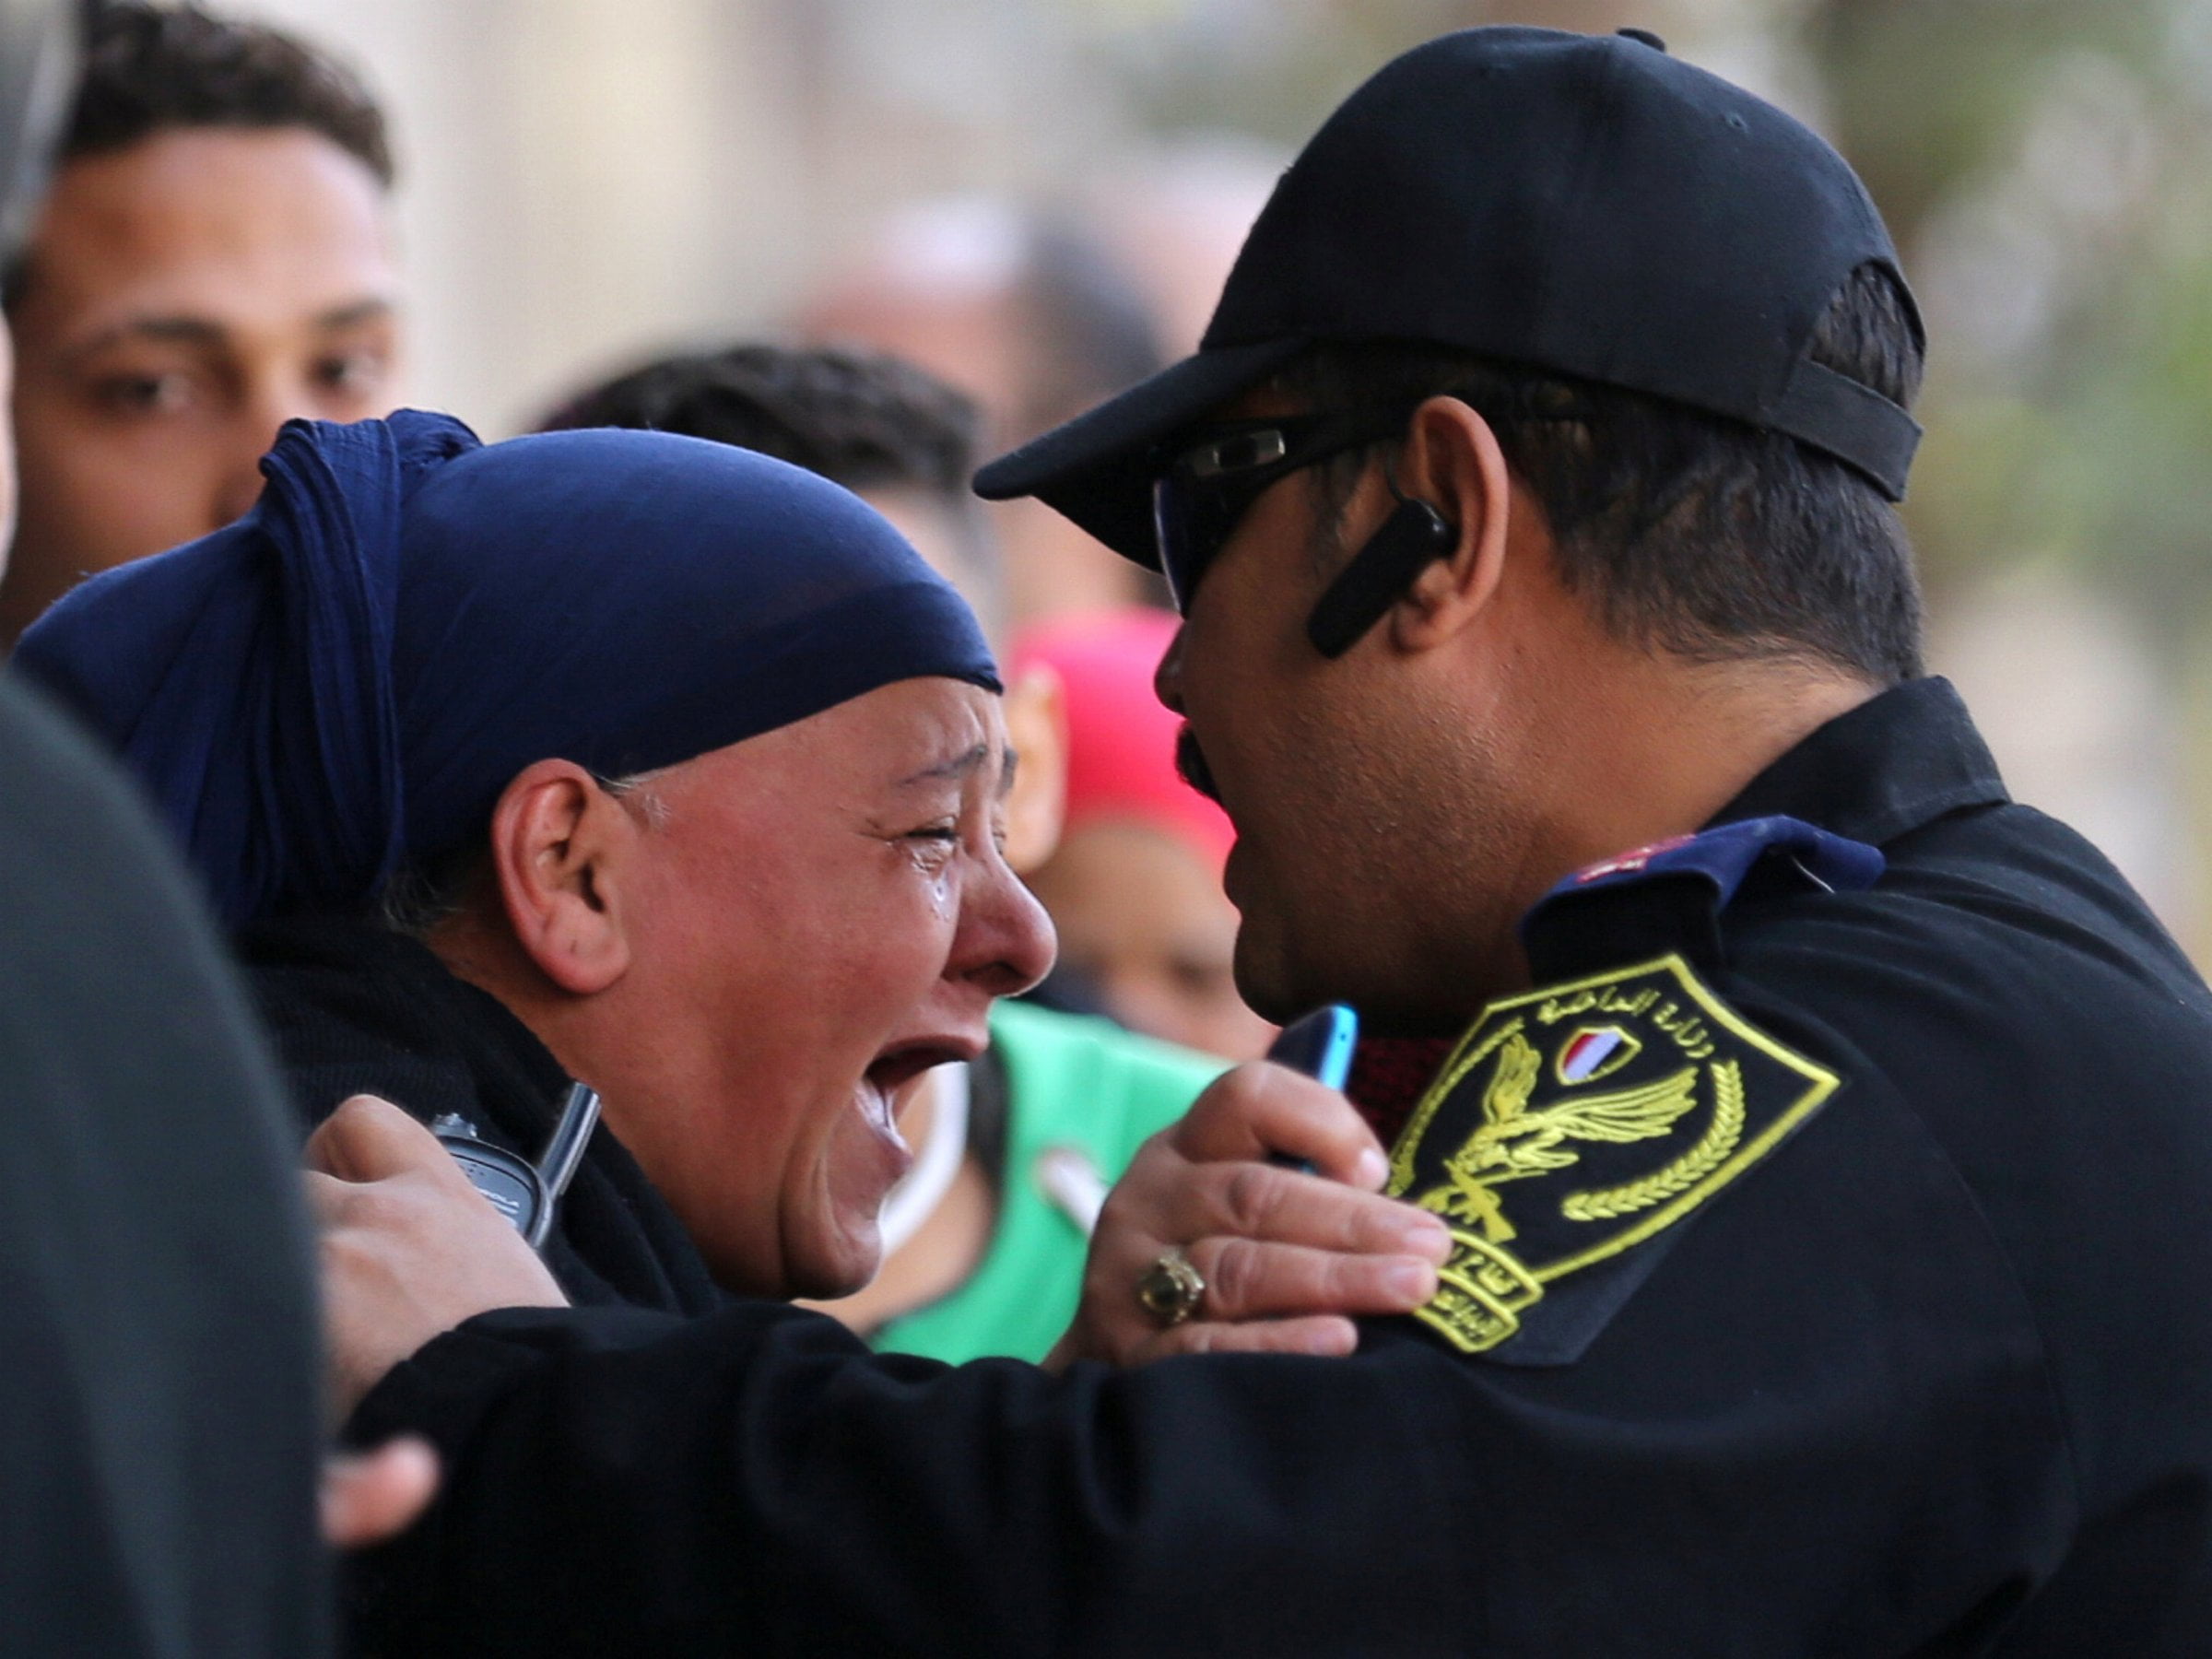 Cairo church bombing kills at least 25, raising fears among Christians